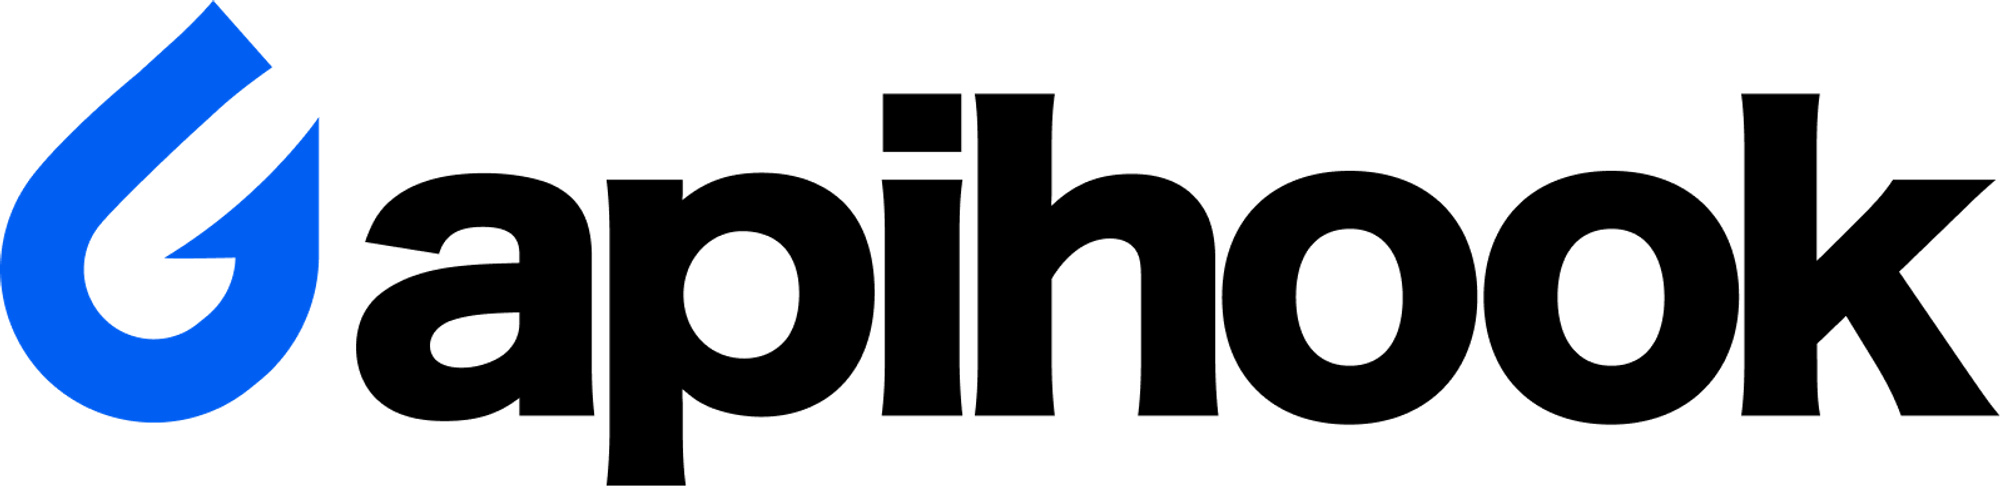 Modern logo design for apihook.io